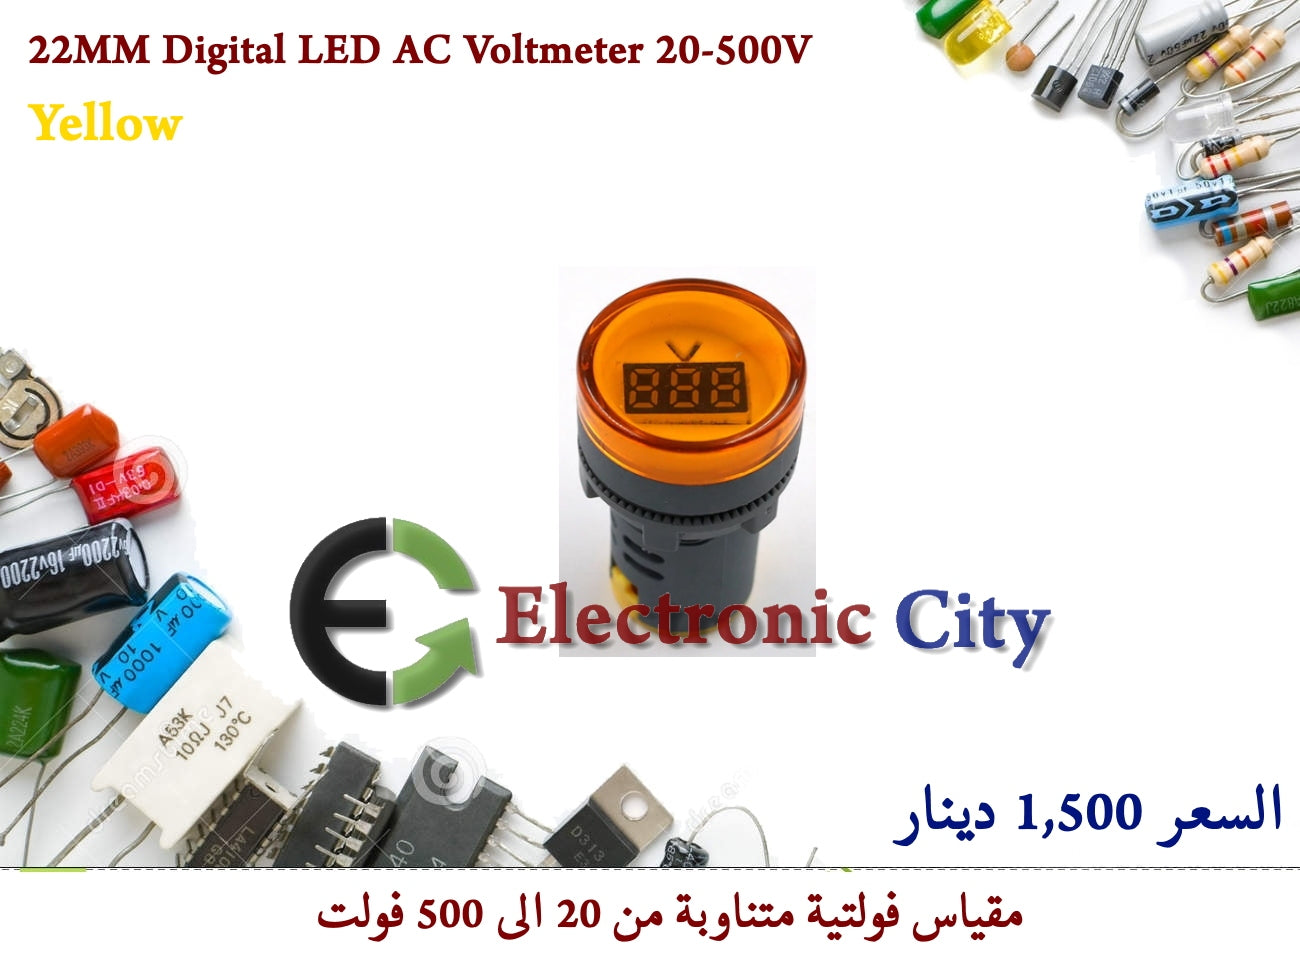 22MM Digital LED AC Voltmeter 20-500V Yellow